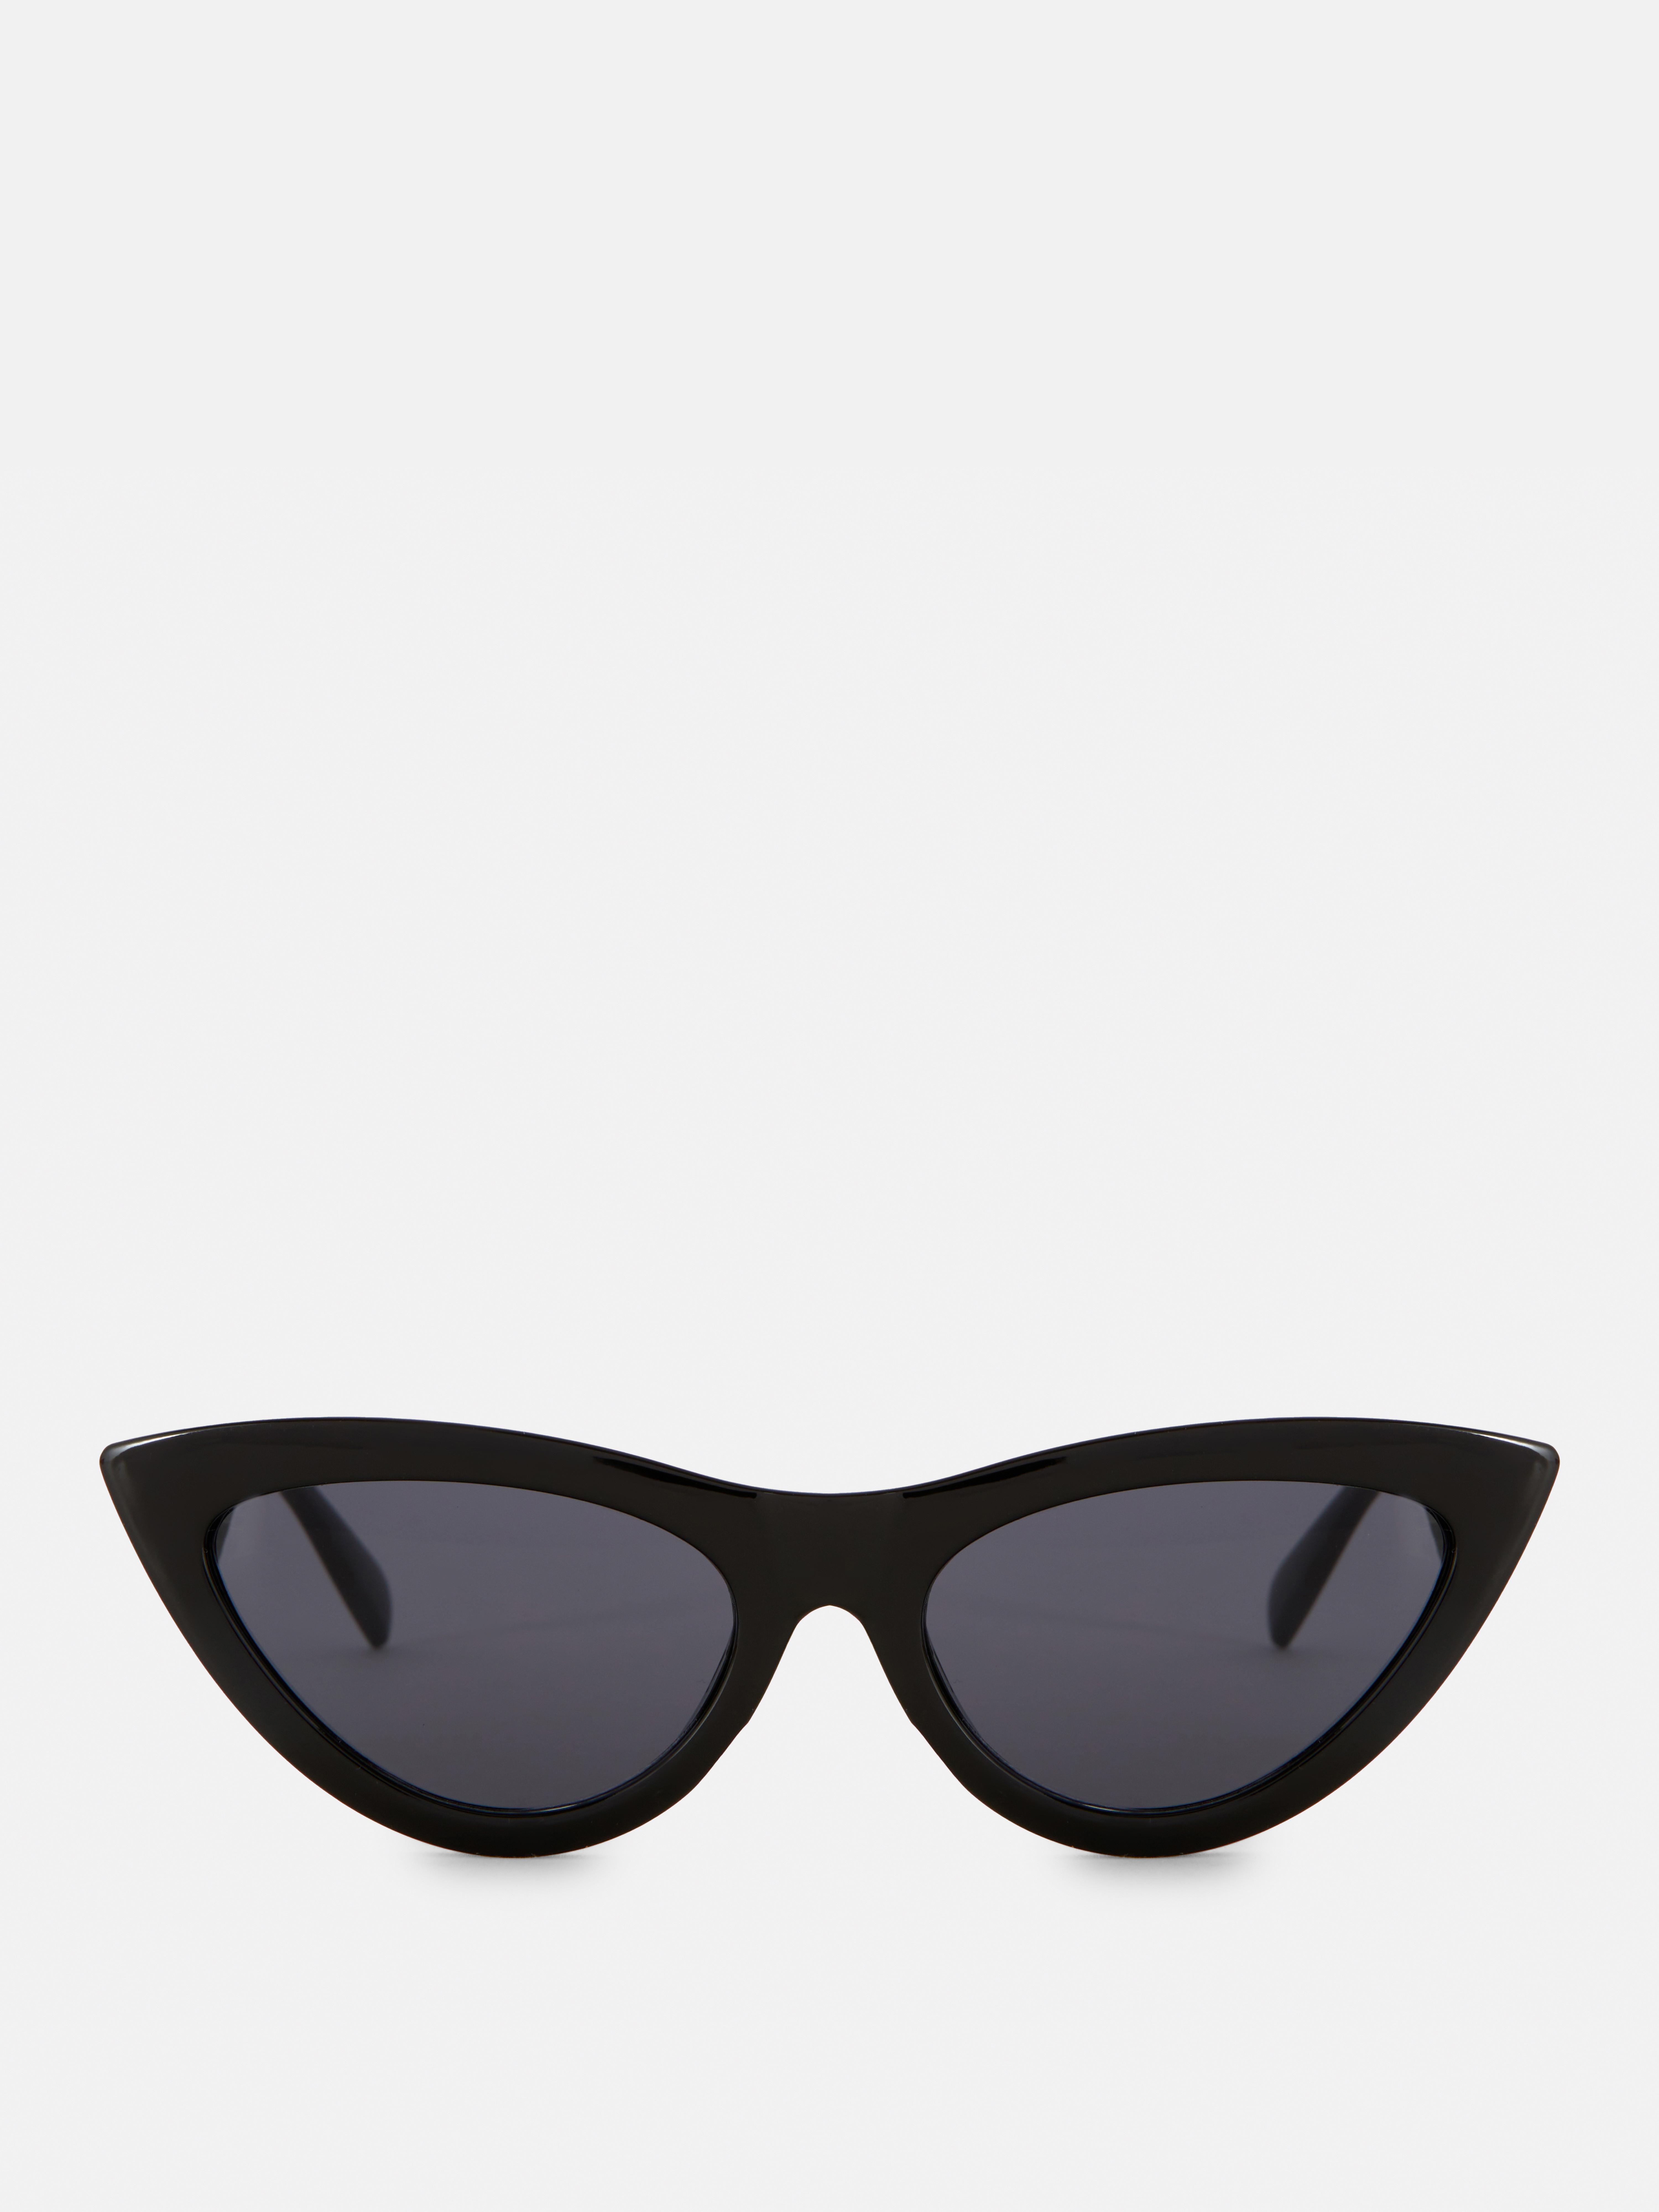 Slim Cat Eye Sunglasses Black